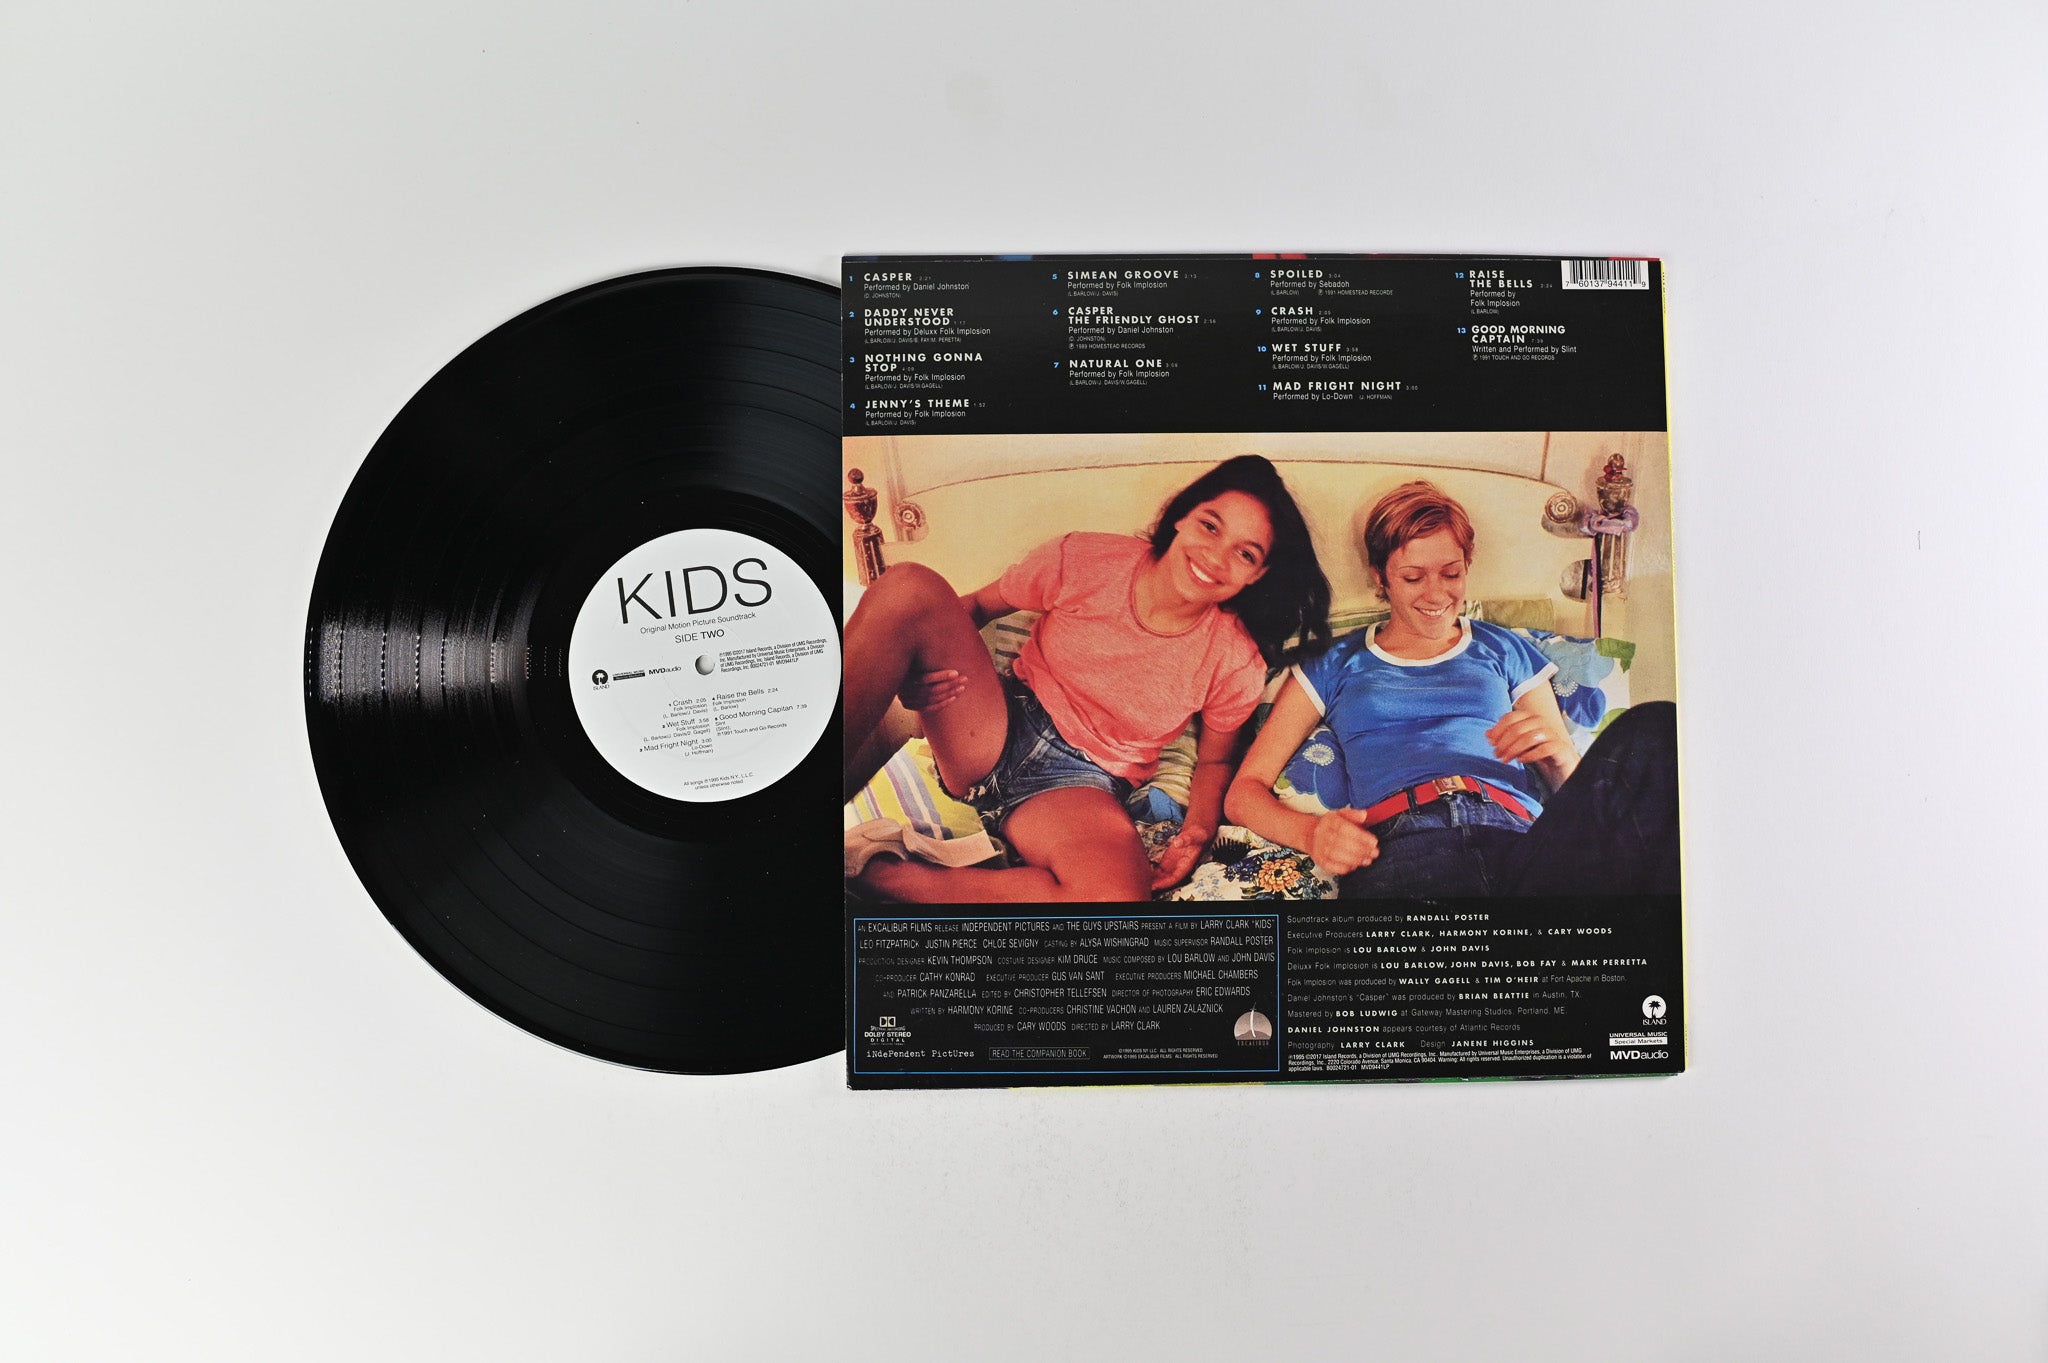 Various - Kids (Original Motion Picture Soundtrack) on MVD Audio Reissue